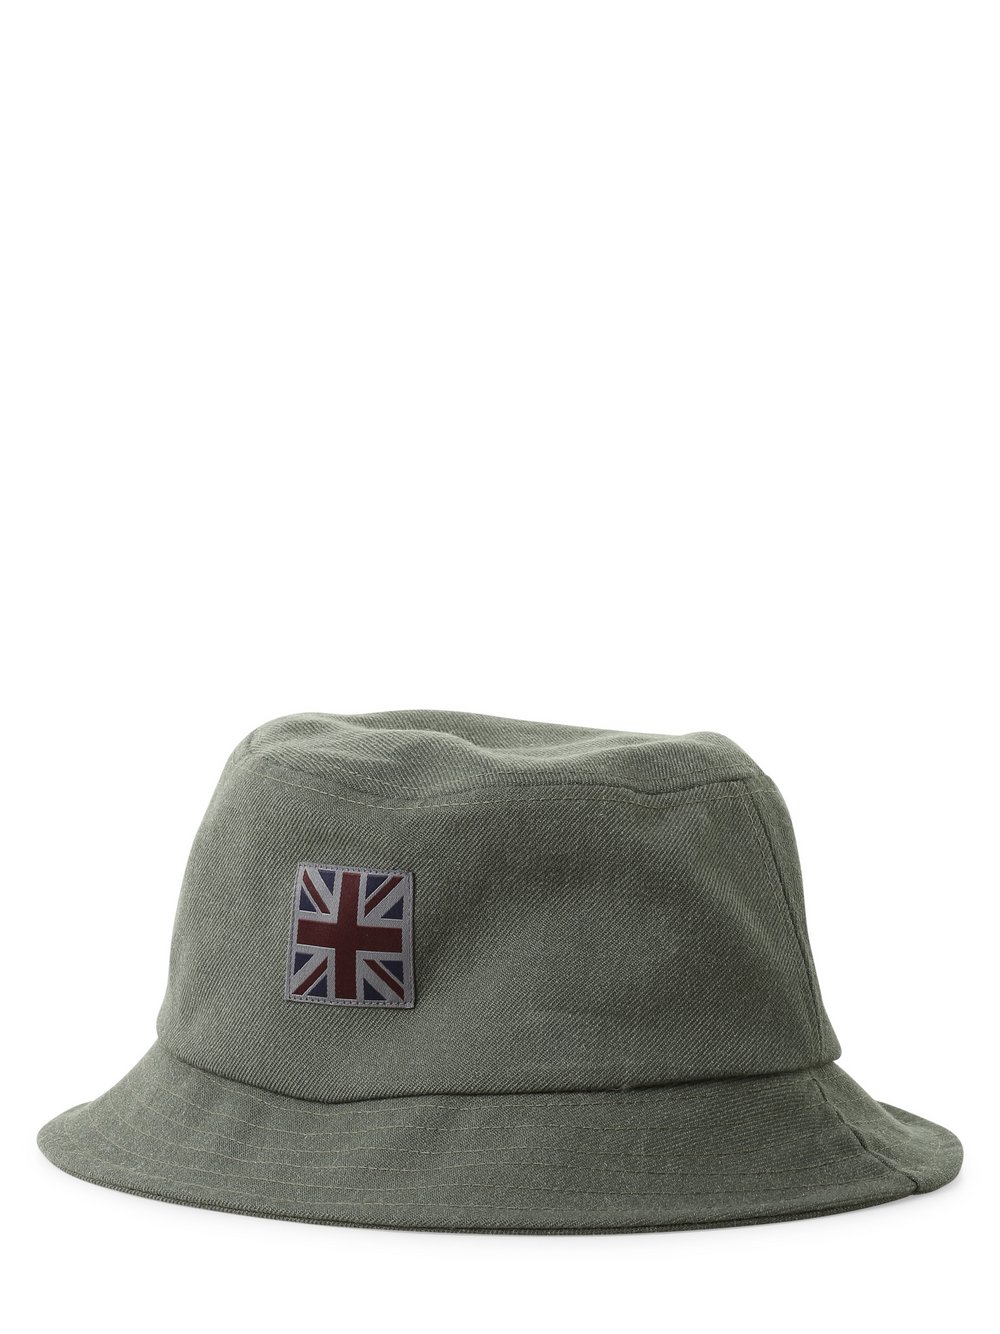 Finshley & Harding London - Męski bucket hat, zielony